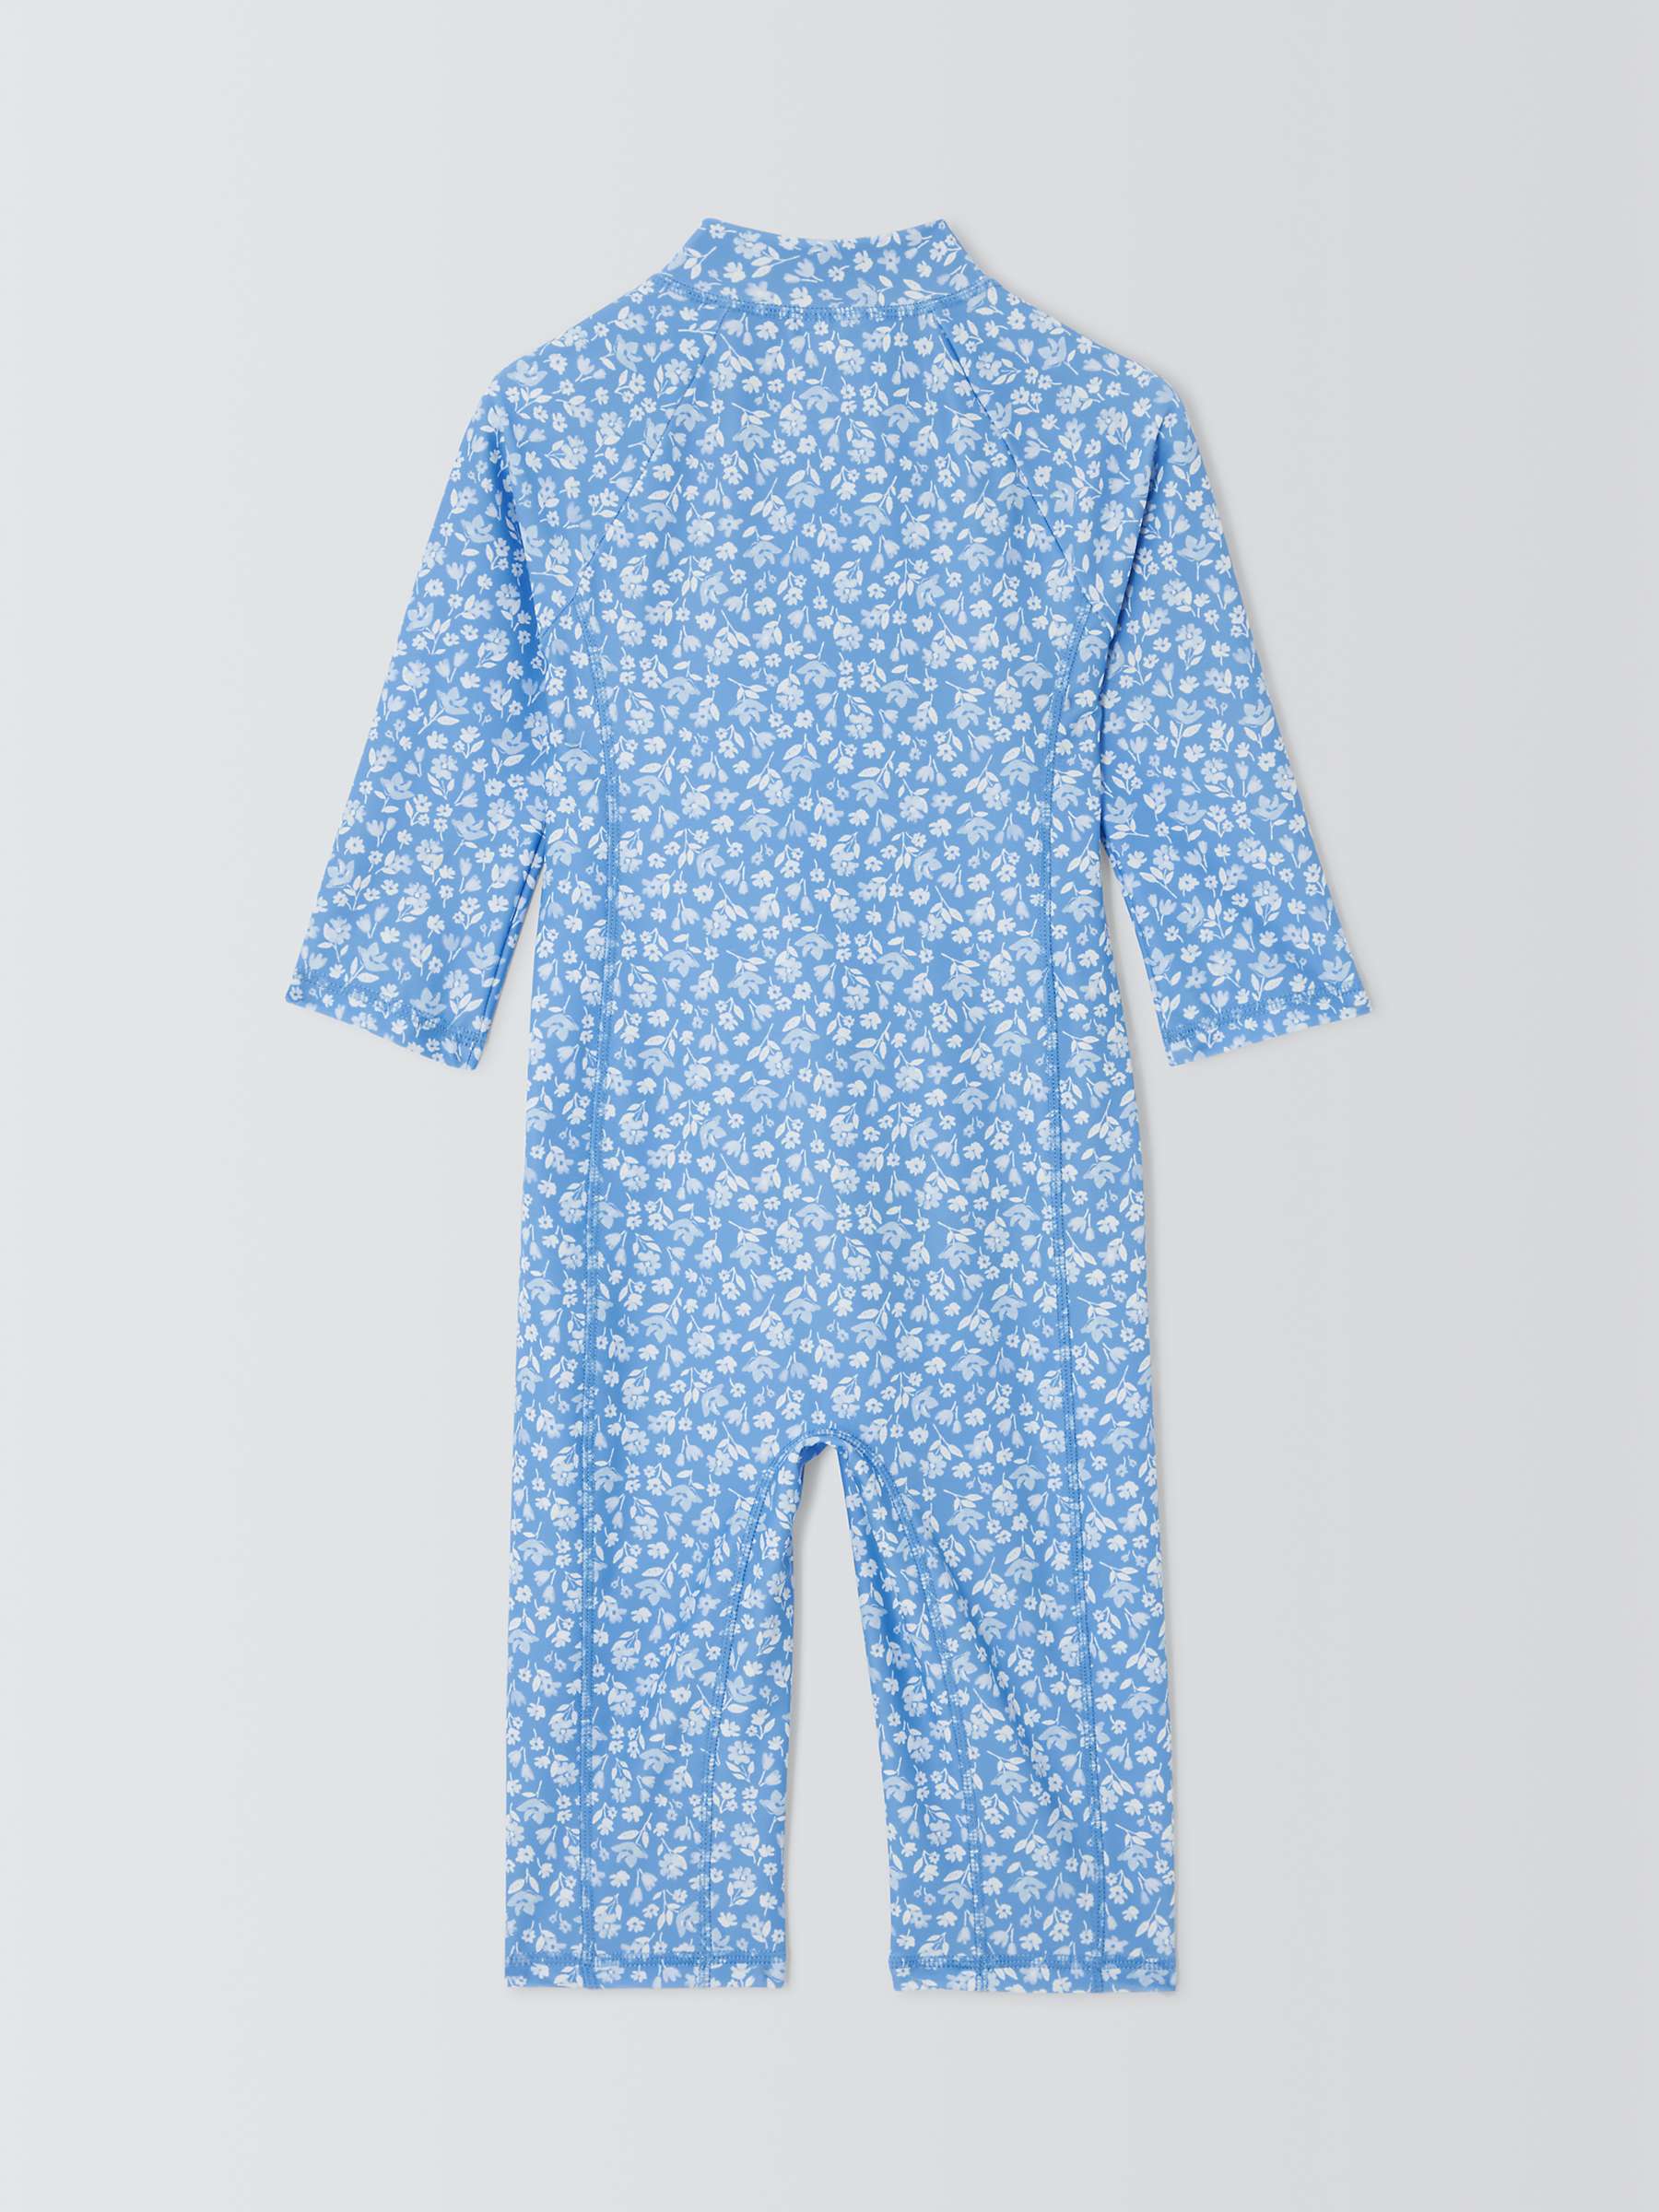 Buy John Lewis Kids' Floral Print Sunpro Swimsuit, Blue Online at johnlewis.com